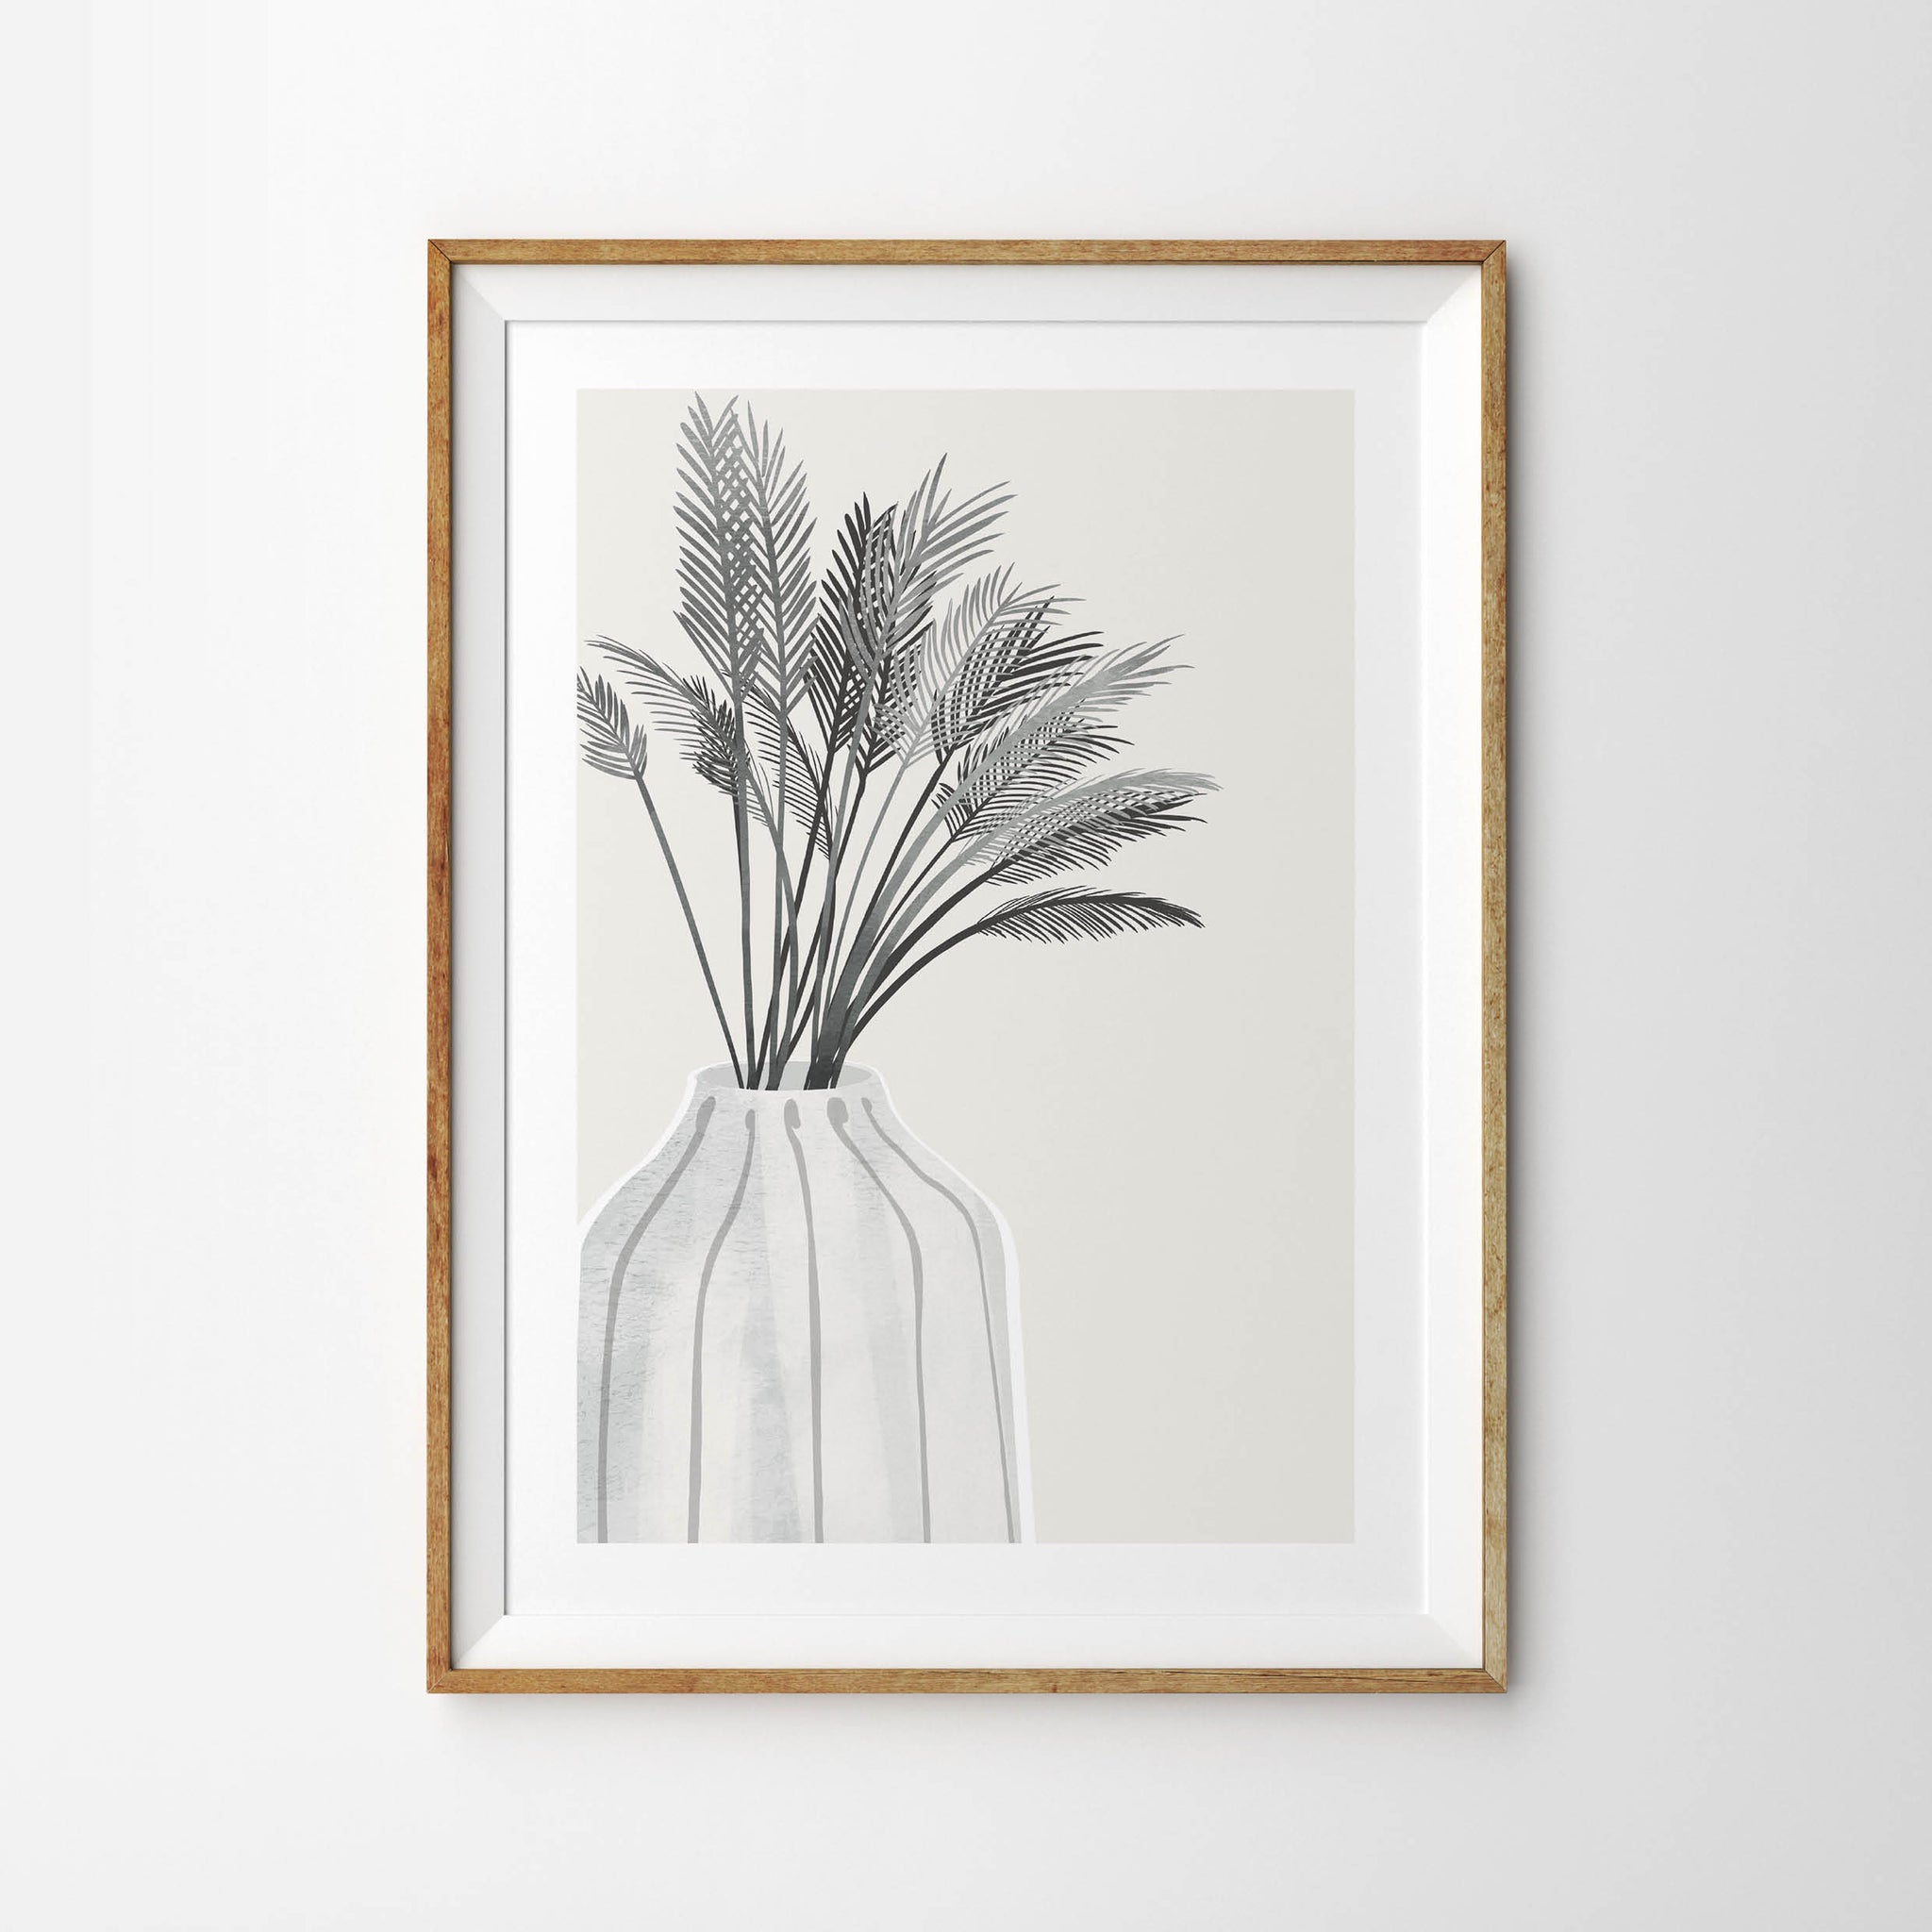 Monochrome Minimalist Grass Stems - Tulip House Studio